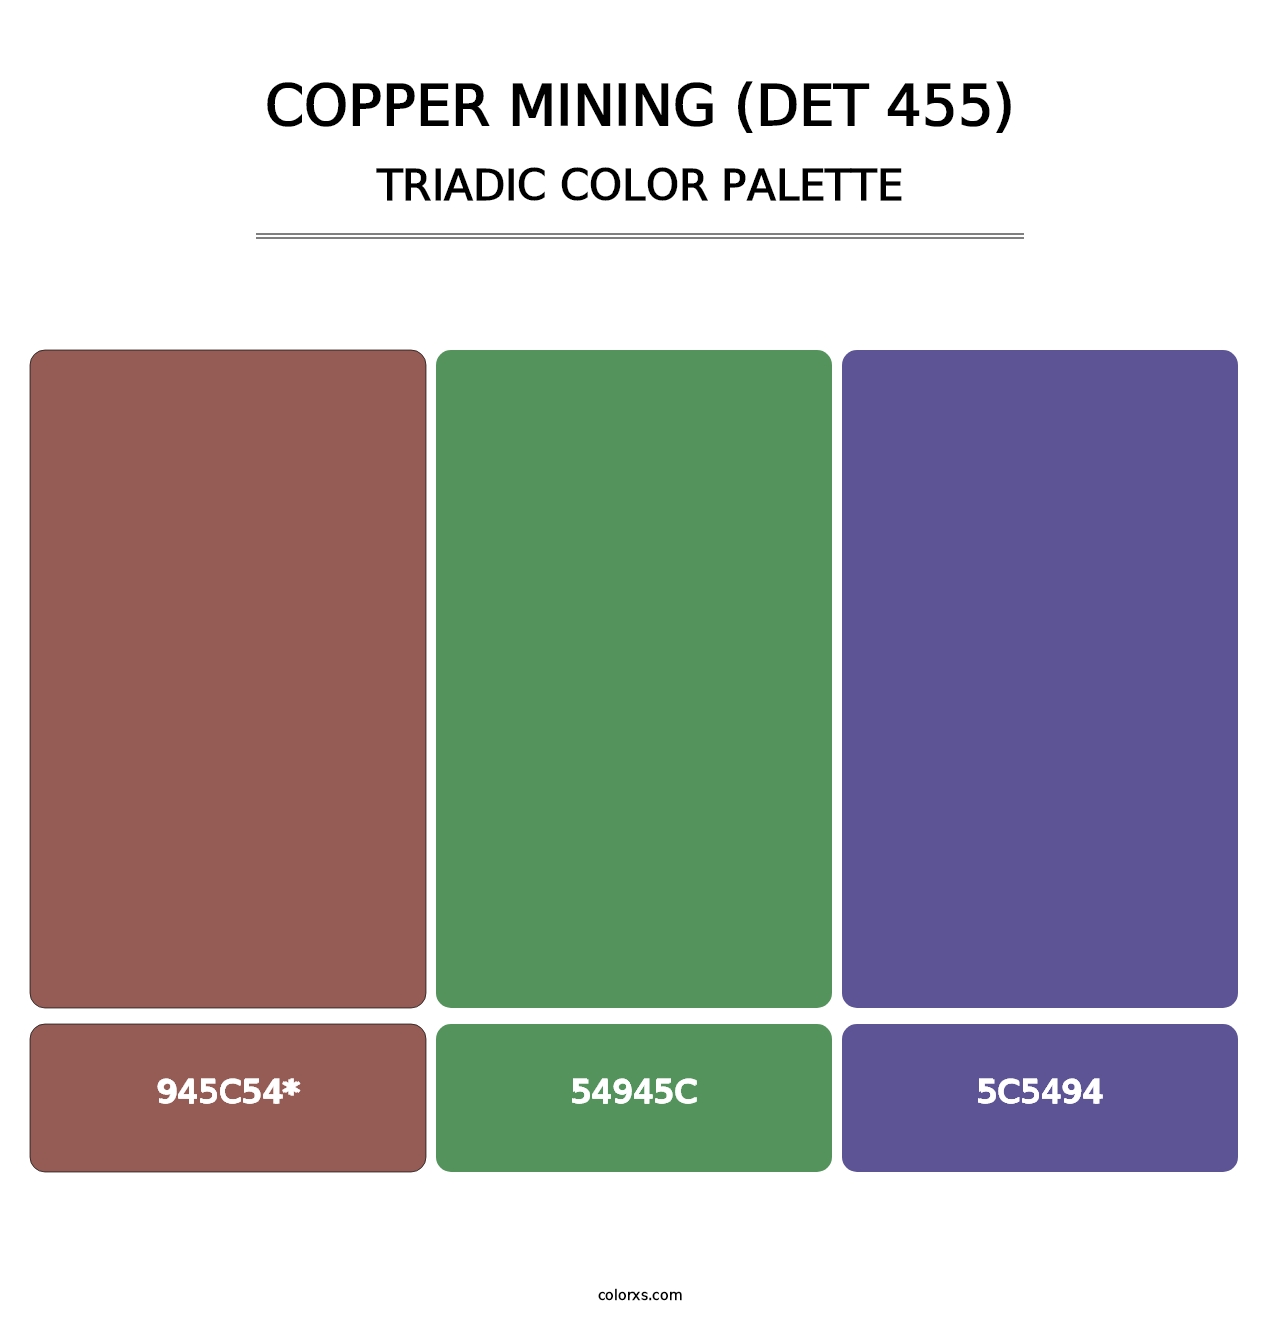 Copper Mining (DET 455) - Triadic Color Palette